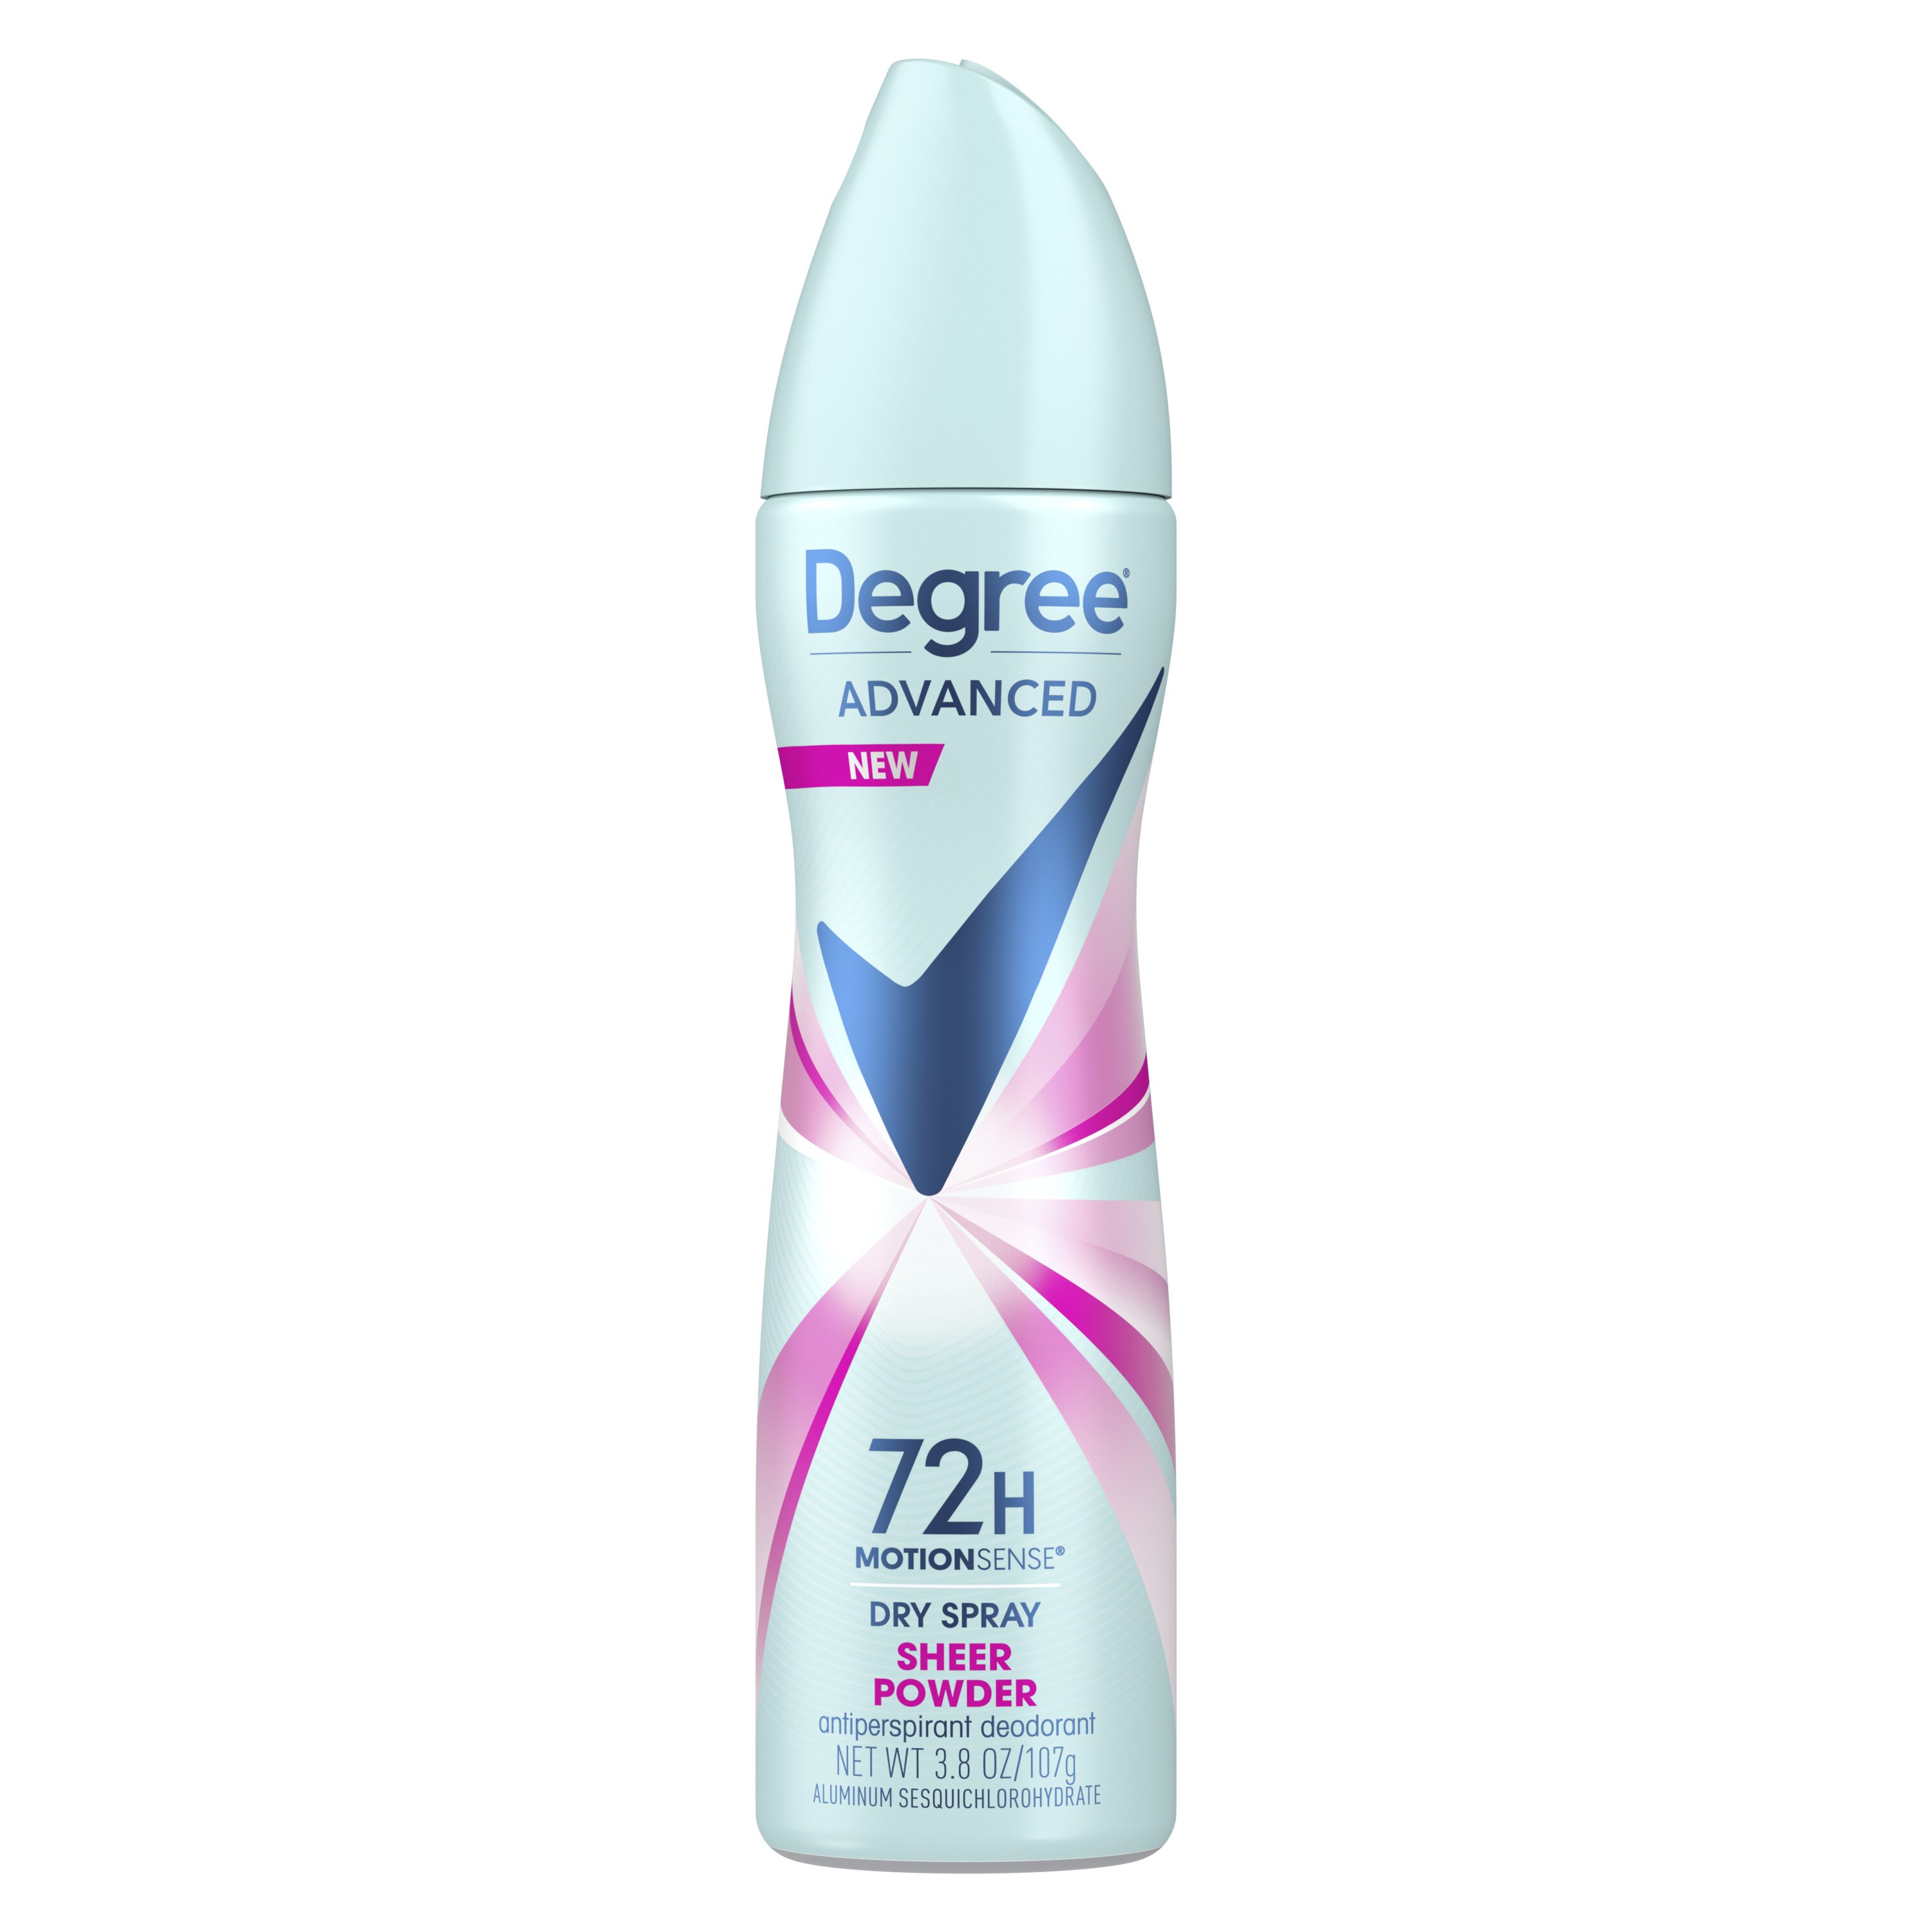 Degree Antiperspirant & Deodorant Dry Spray 72-Hour Advanced Motionsense, Sheer Powder, 3.8 OZ